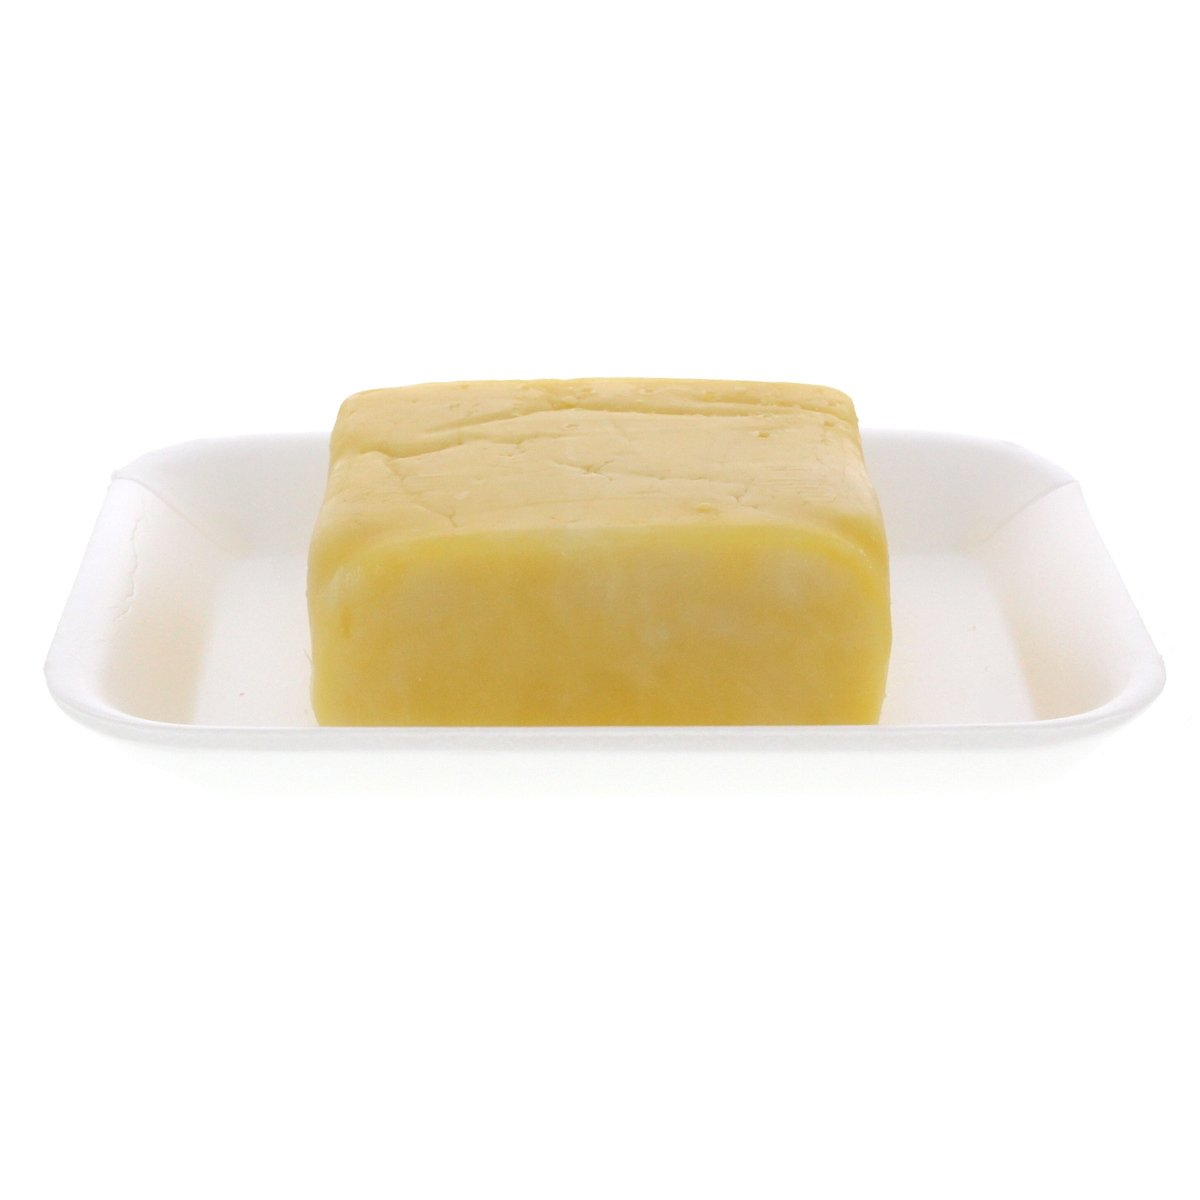 Bega Strong & Bitey Cheddar Cheese Block 250 g